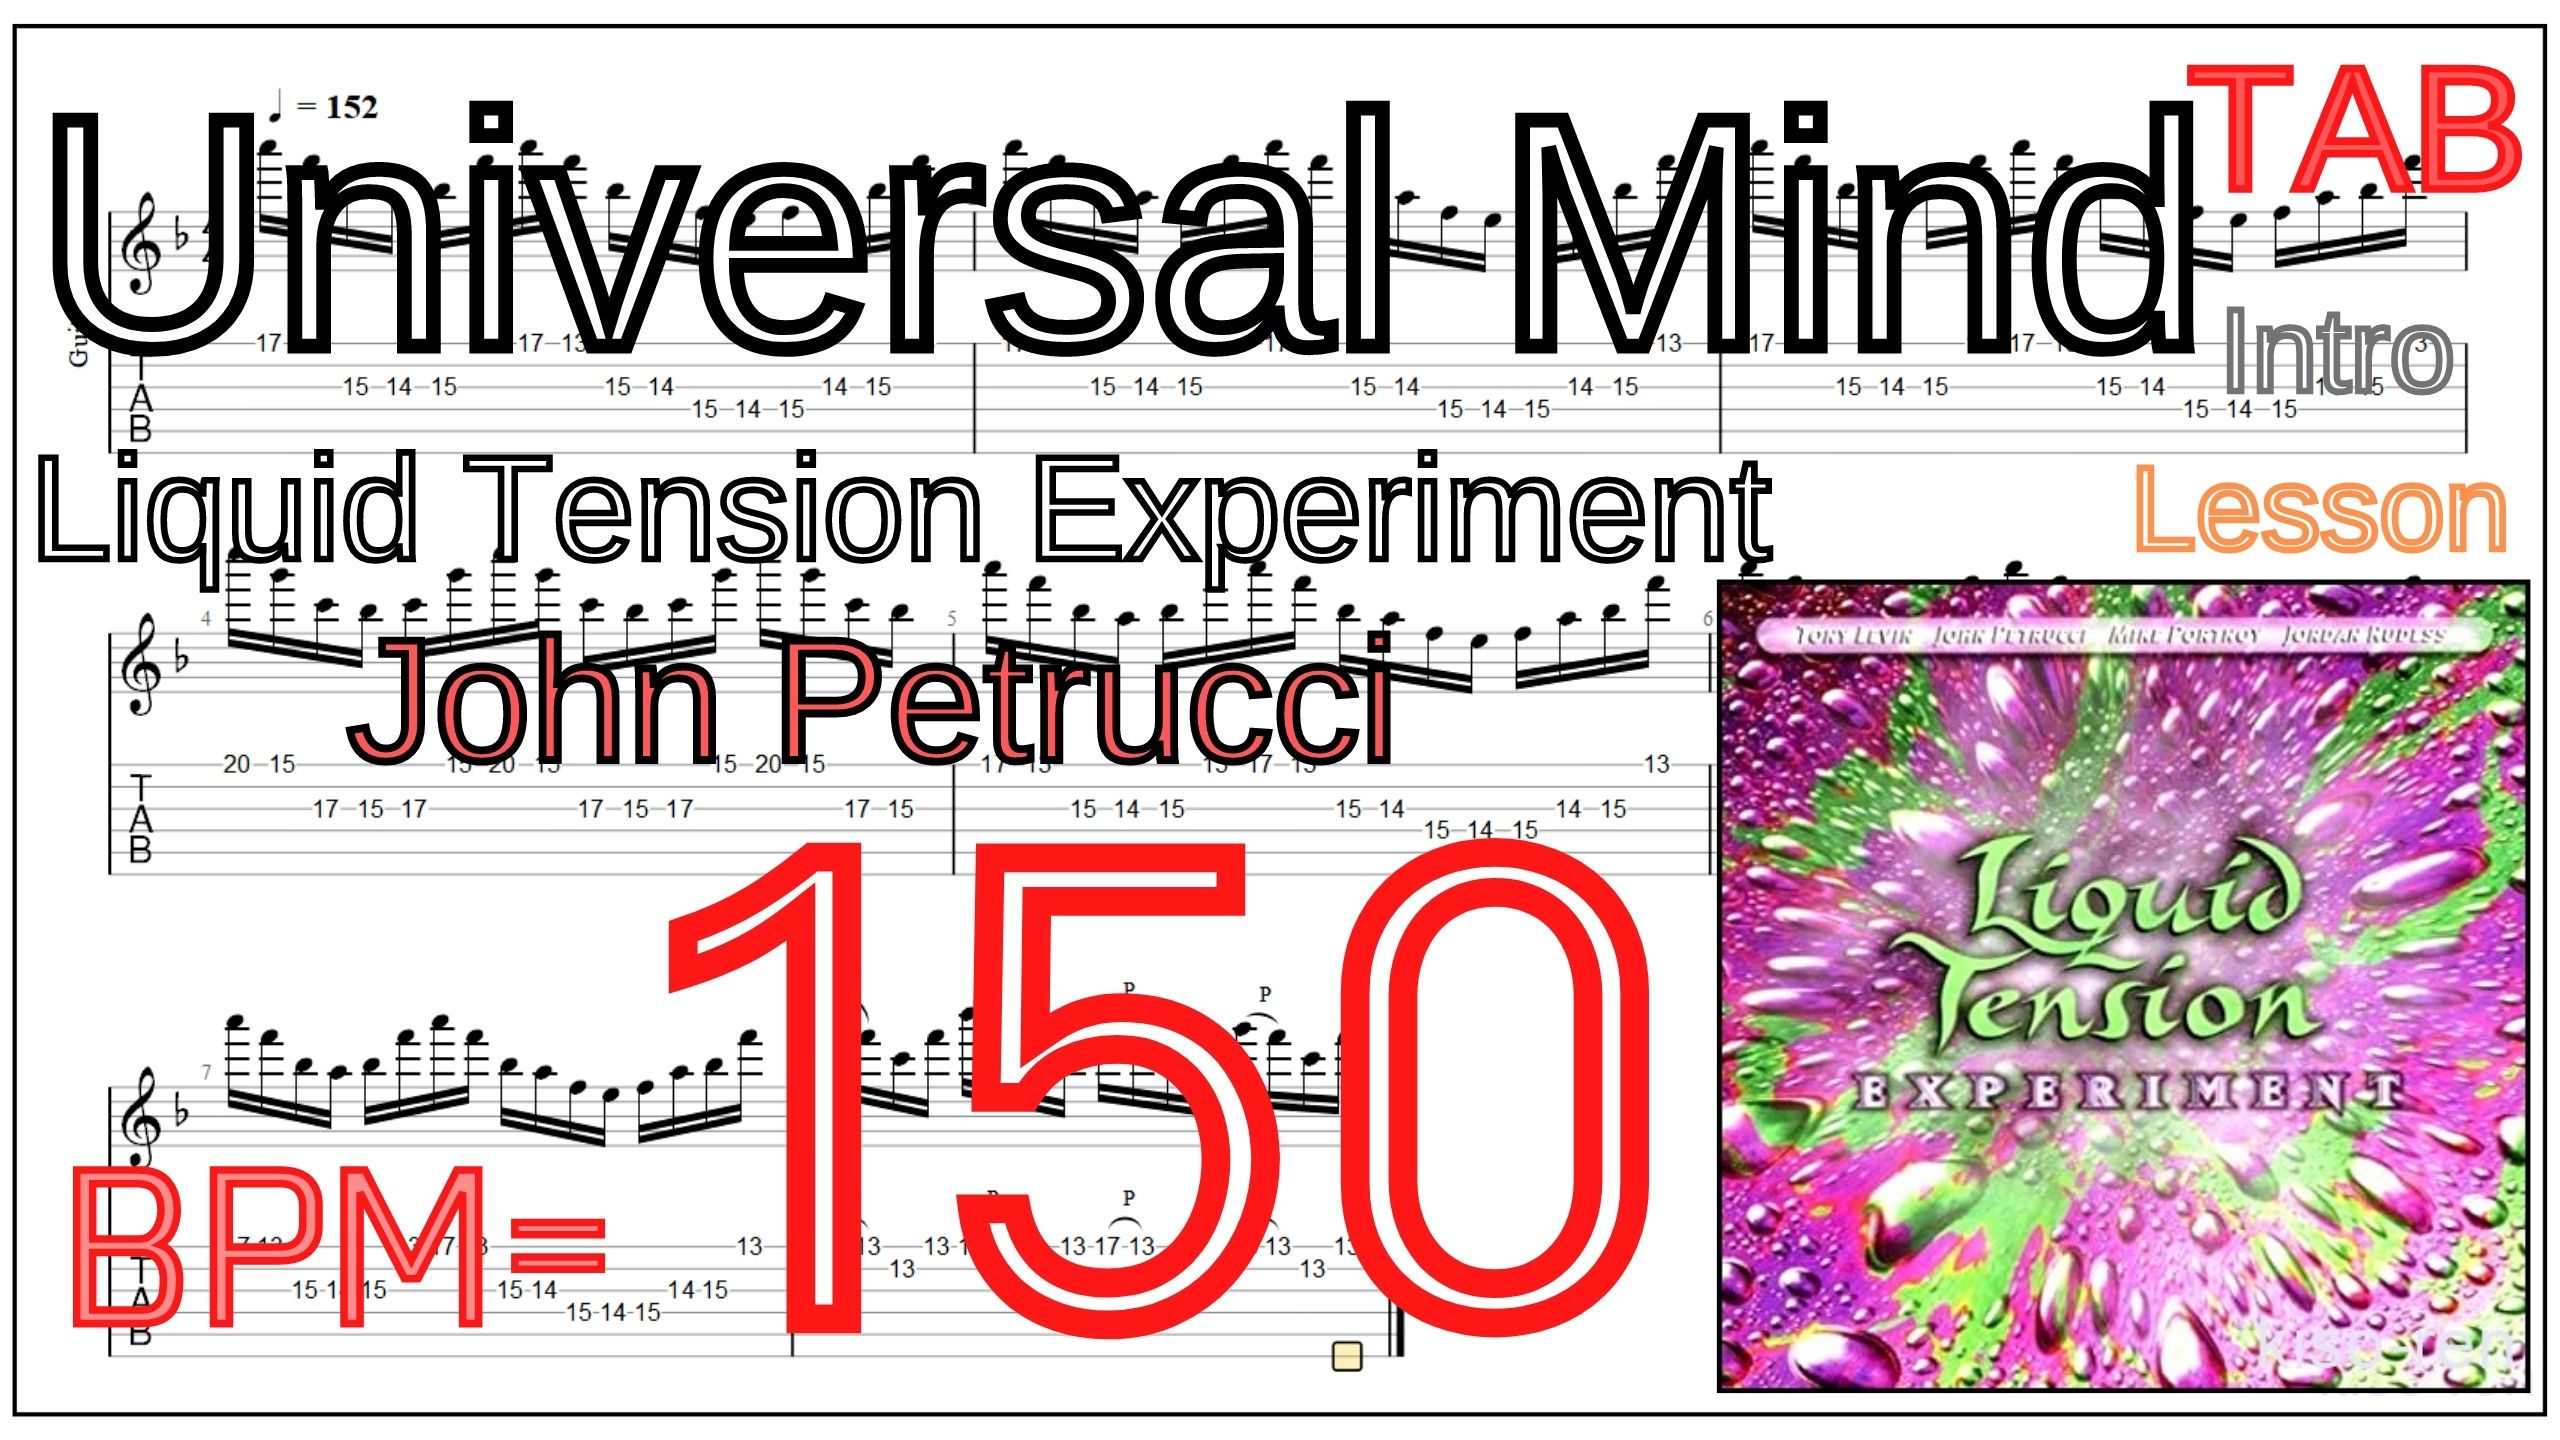 2.Universal Mind / Liquid Tension Experiment(LTE) Intro John Petrucci Lesson ギター練習